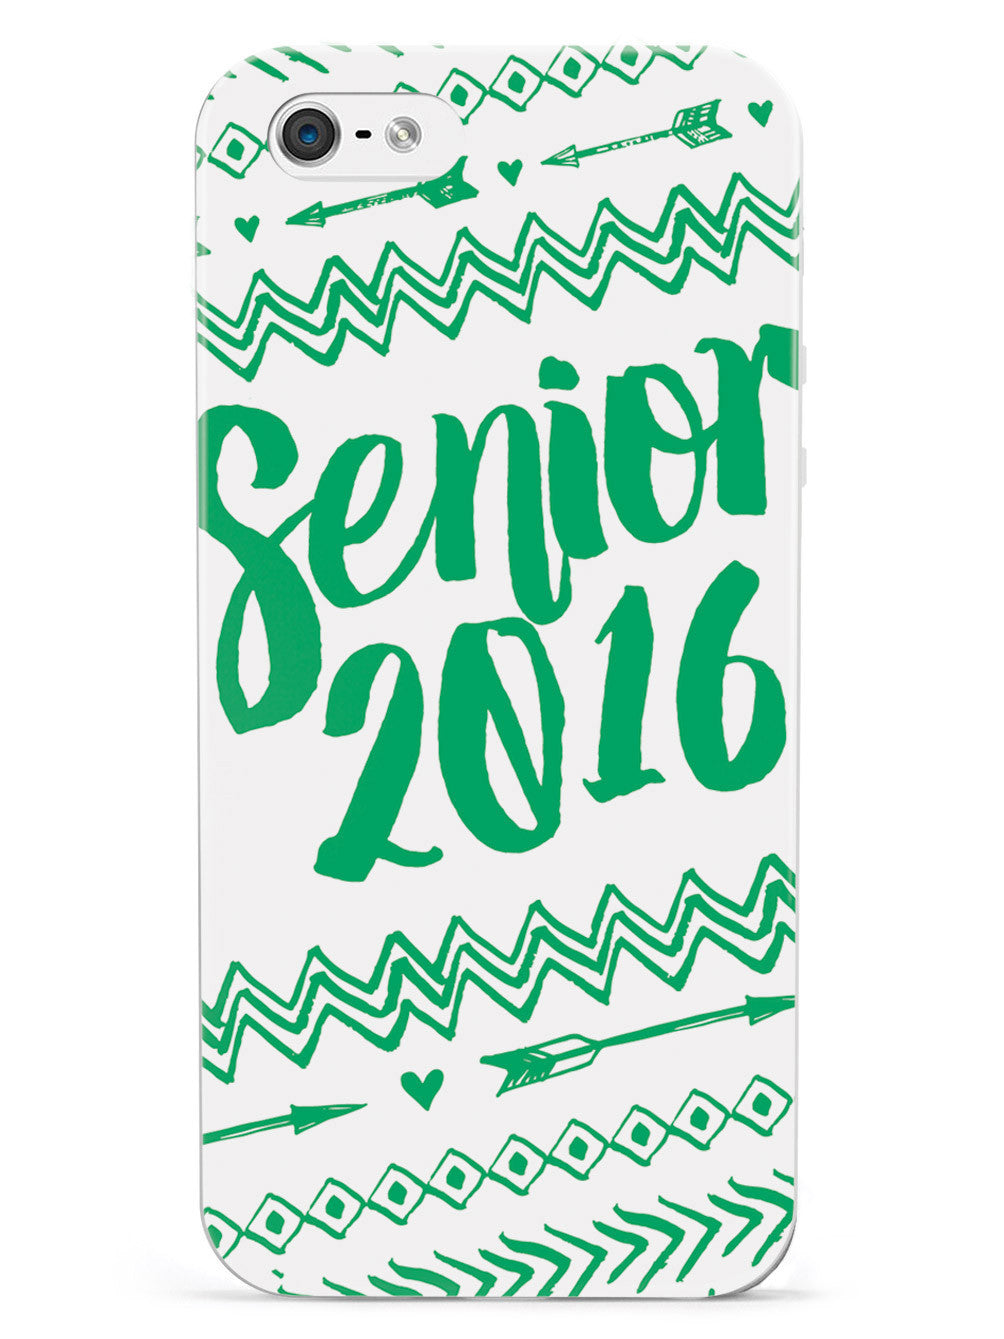 Senior 2016 - Green Case